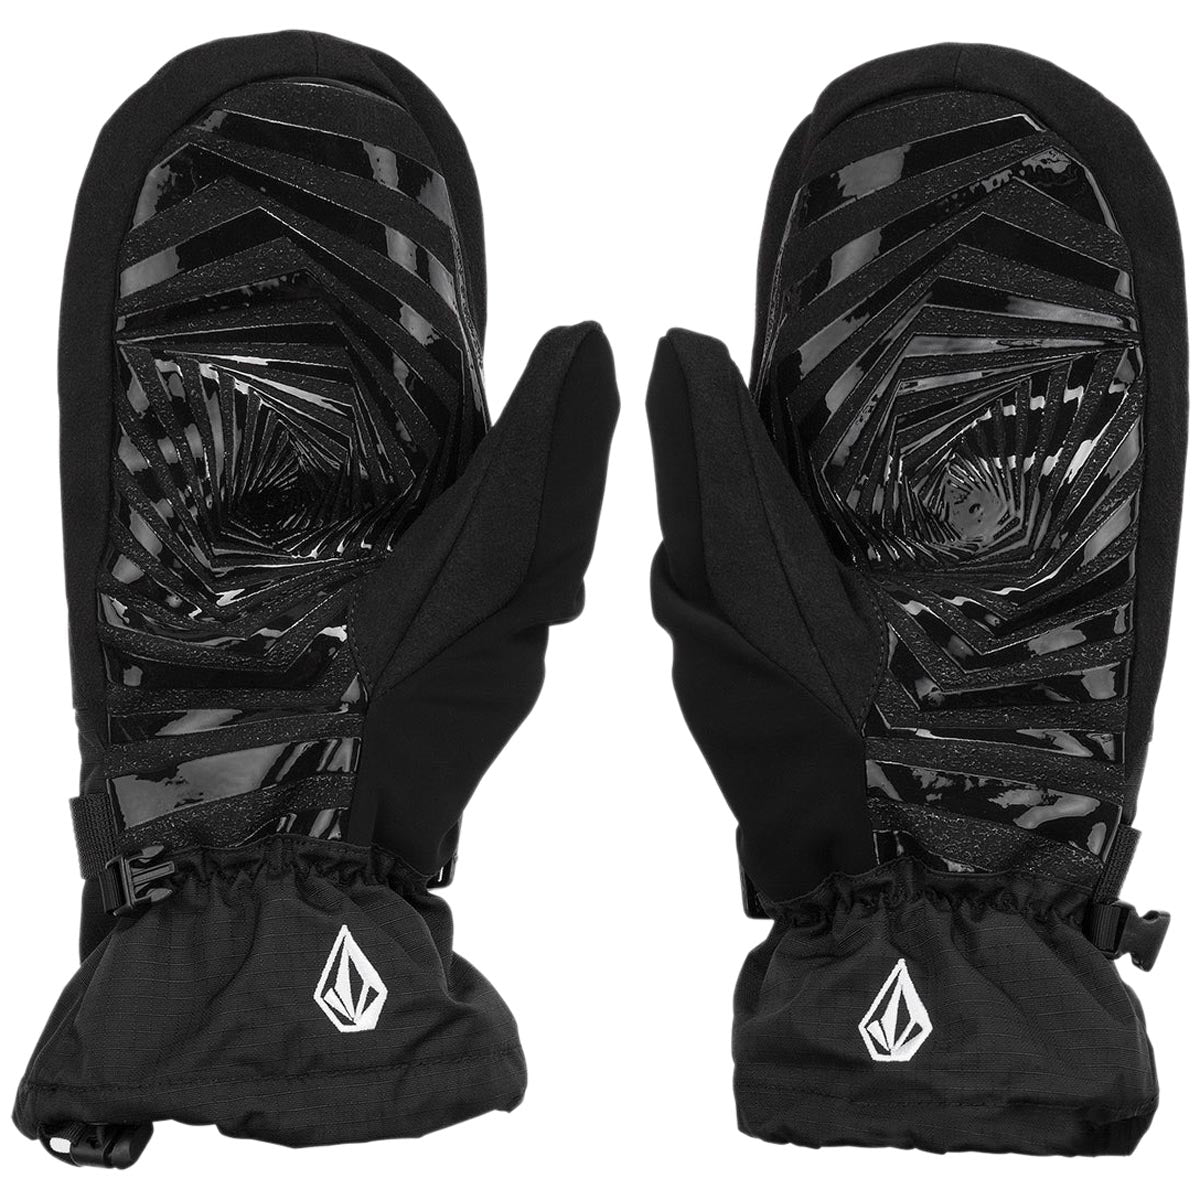 Volcom Millicent Mitt Snowboard Gloves - Black image 2